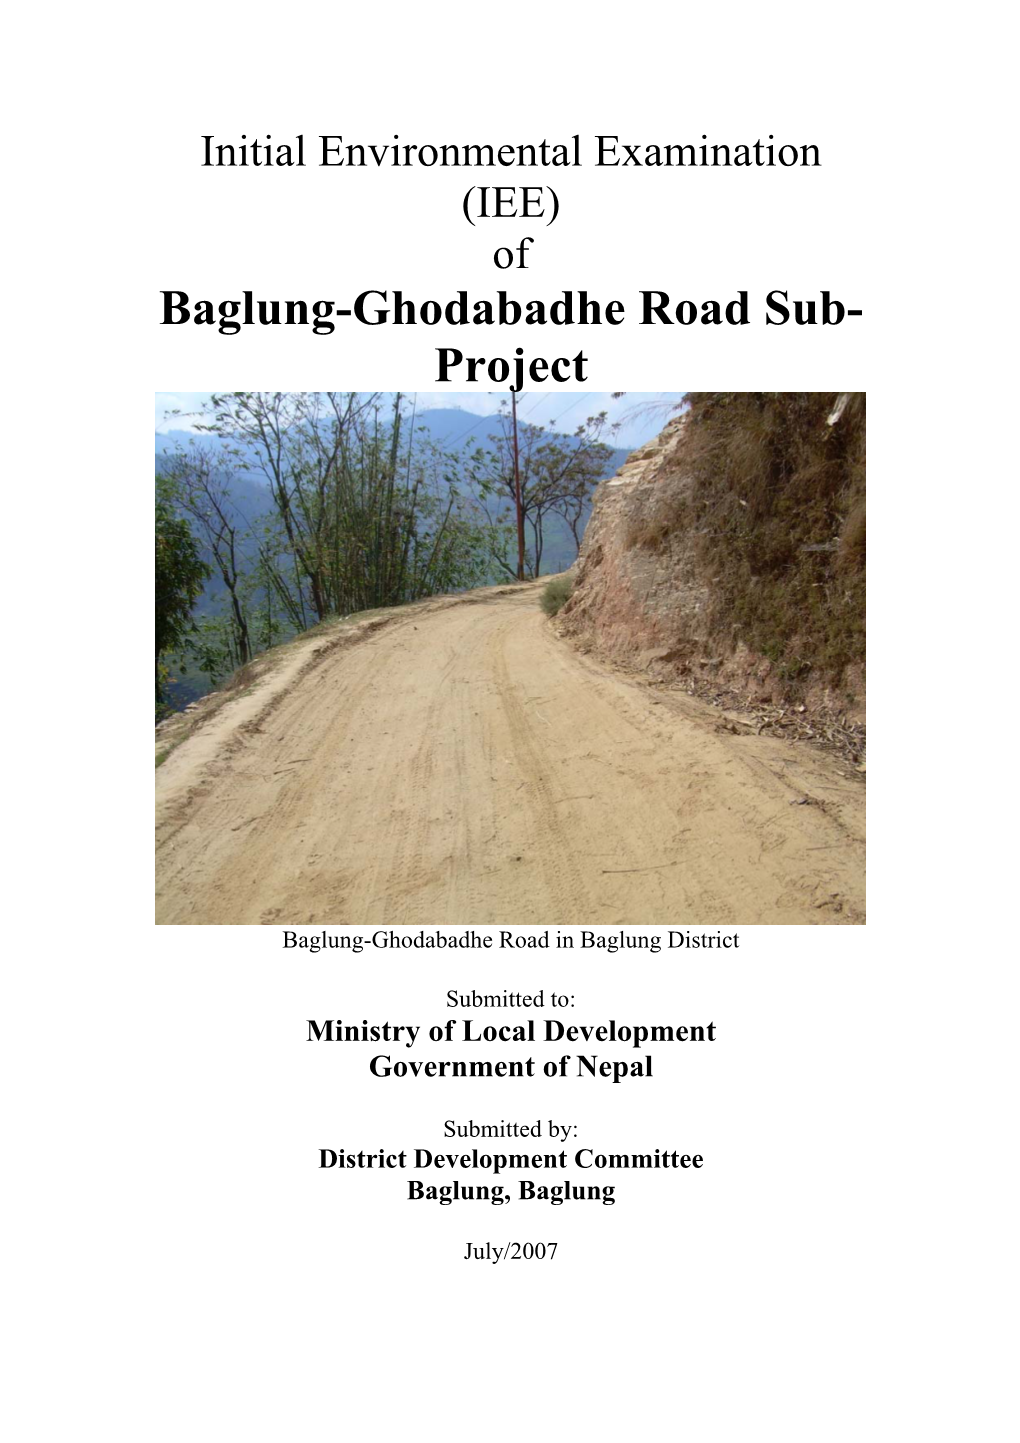 Baglung-Ghodabadhe Road Sub-Project 1-4 7-1 Environmental Management Organization Structure 7-3